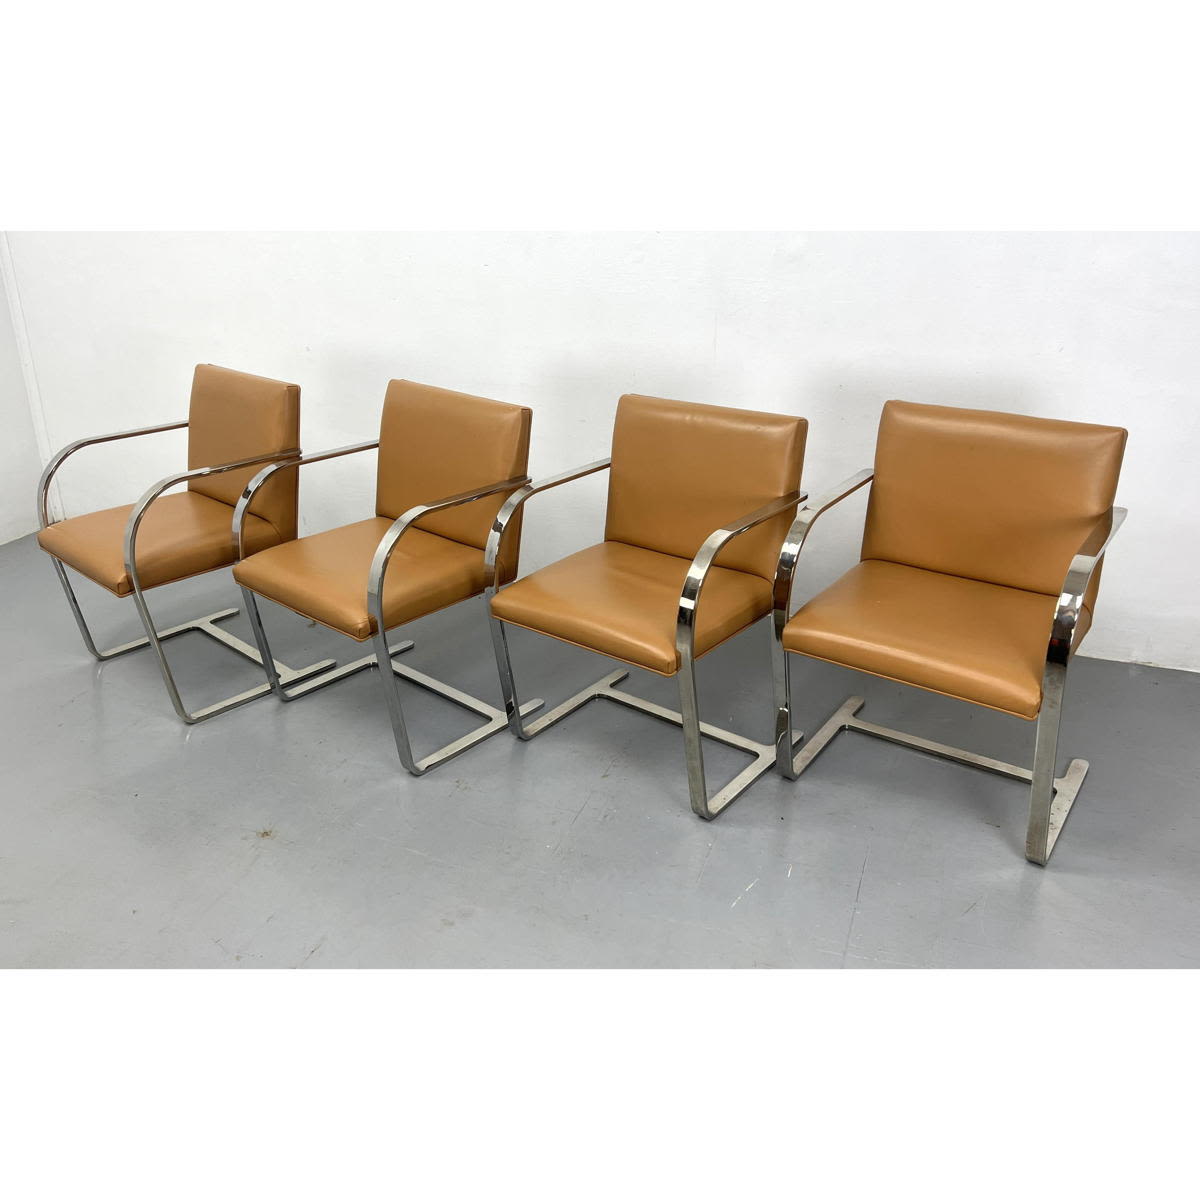 Set 4 BRNO style chrome arm chairs 3ad65c